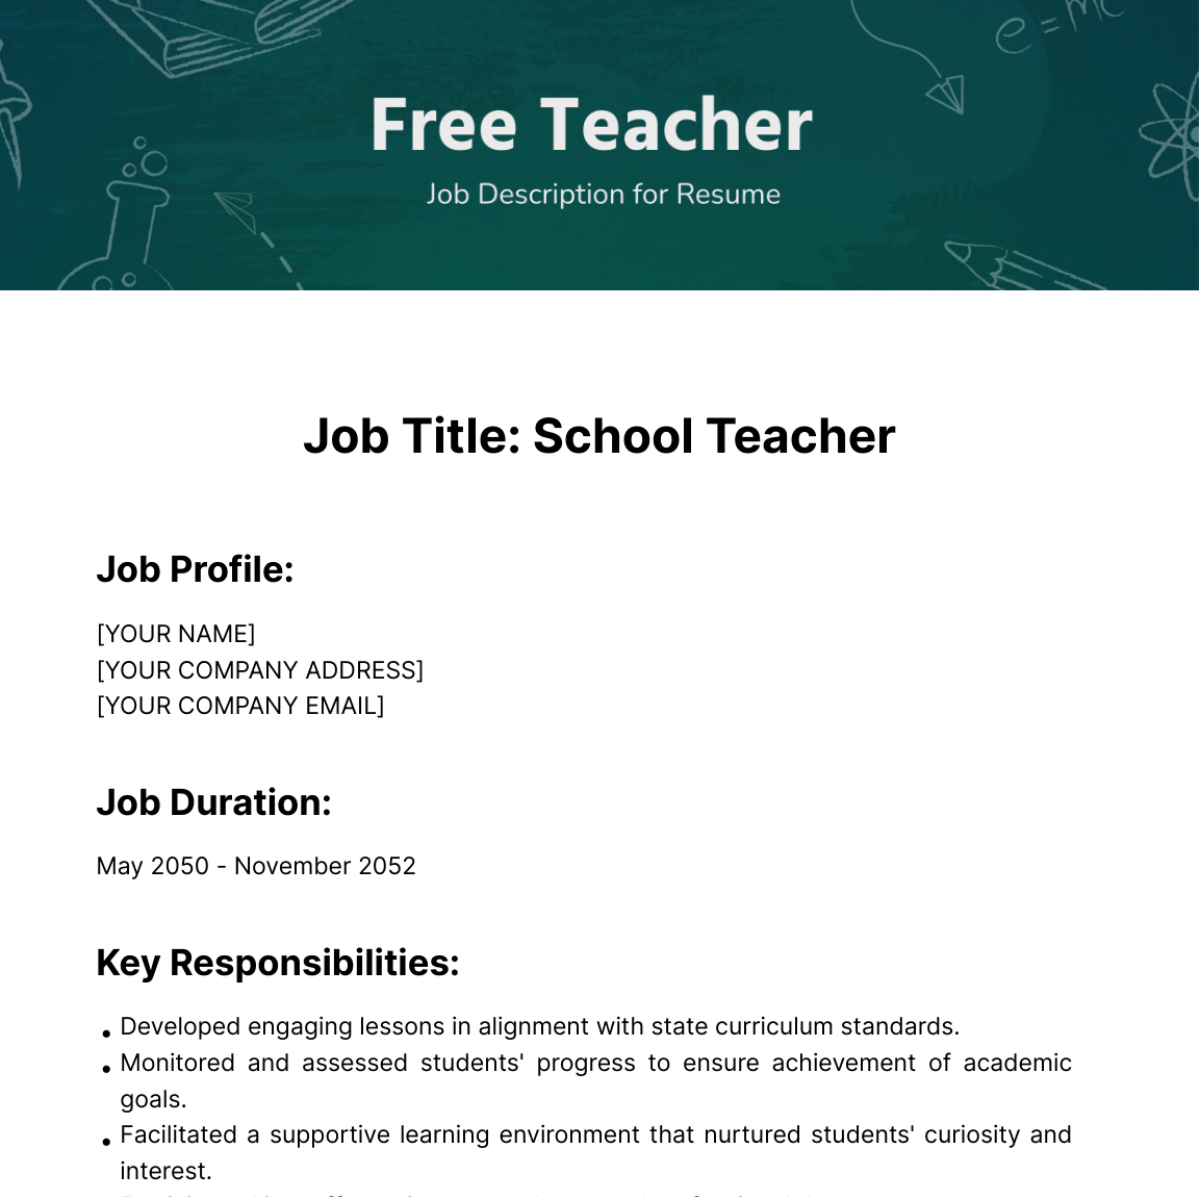 Free Teacher Job Description for Resume Template